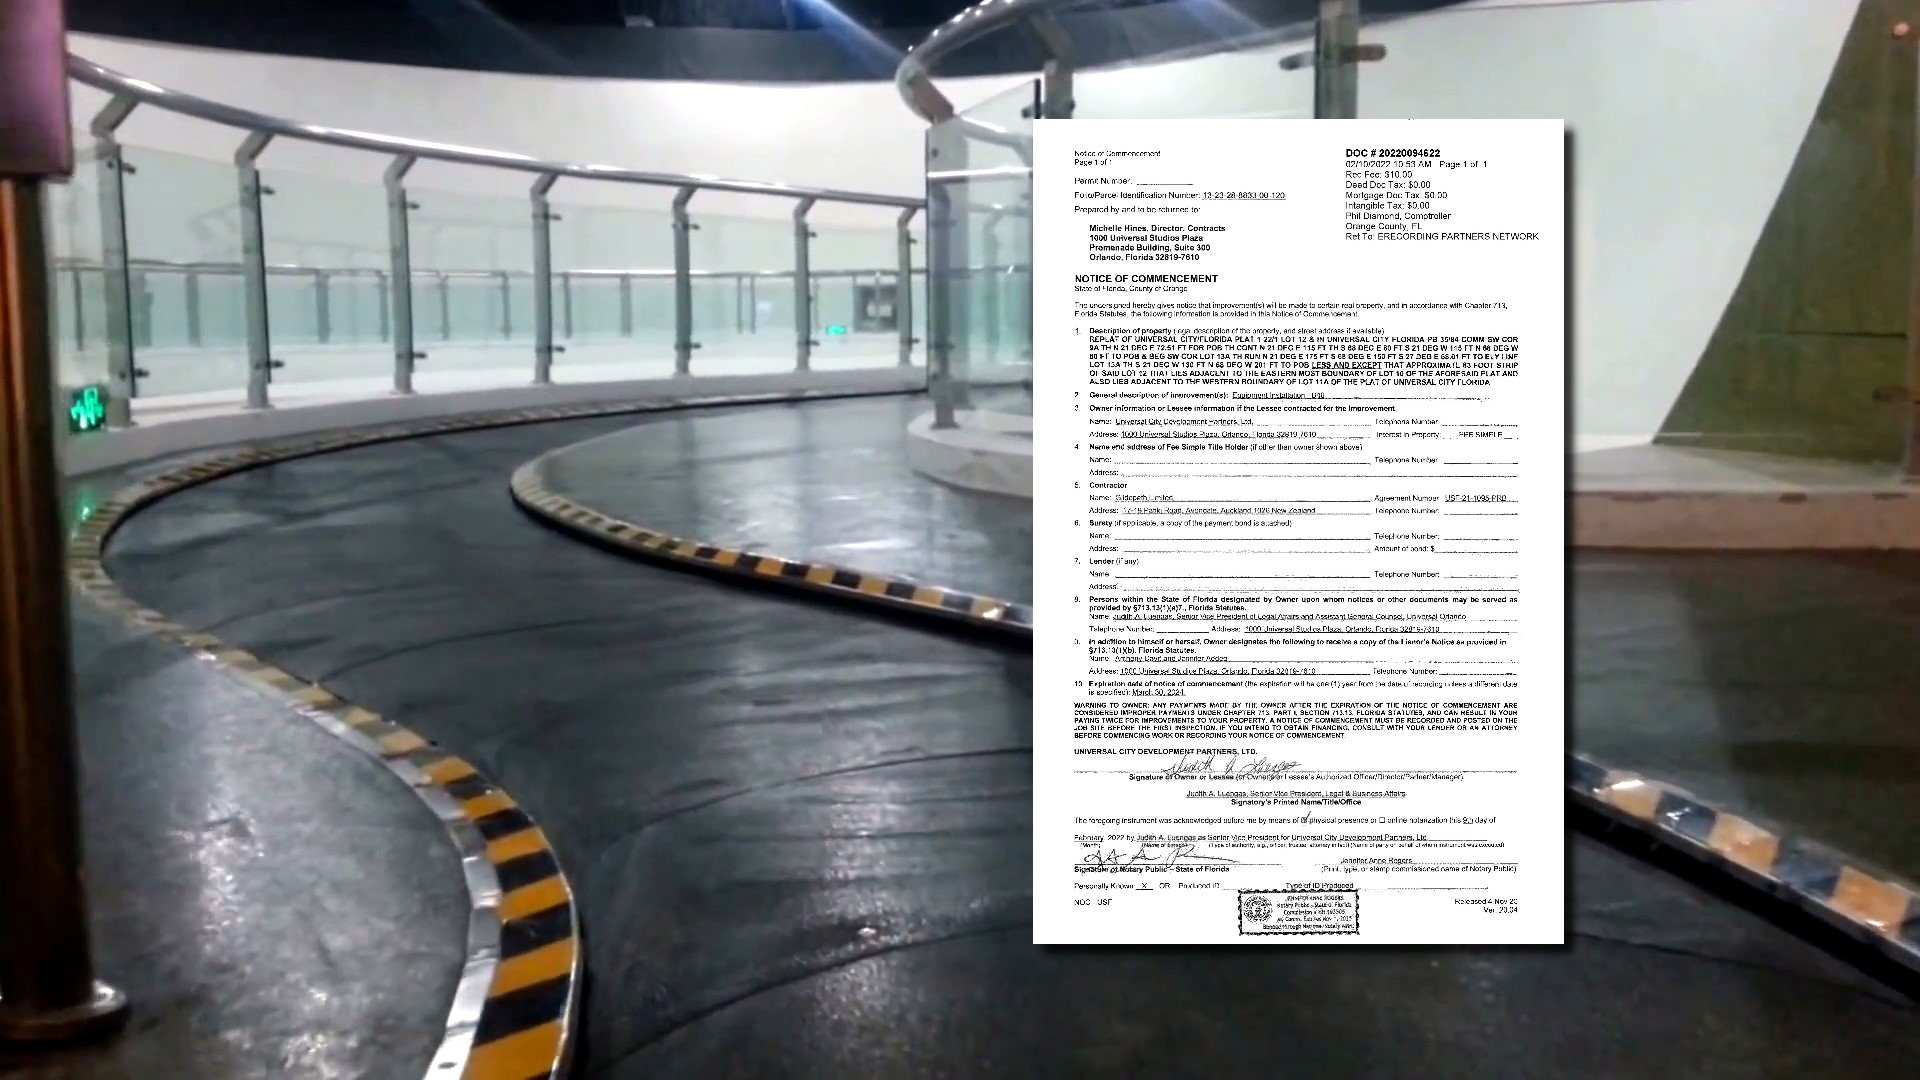 New Permit Confirms Moving Walkway Attraction Replacing Shrek 4-D at Universal Studios Florida